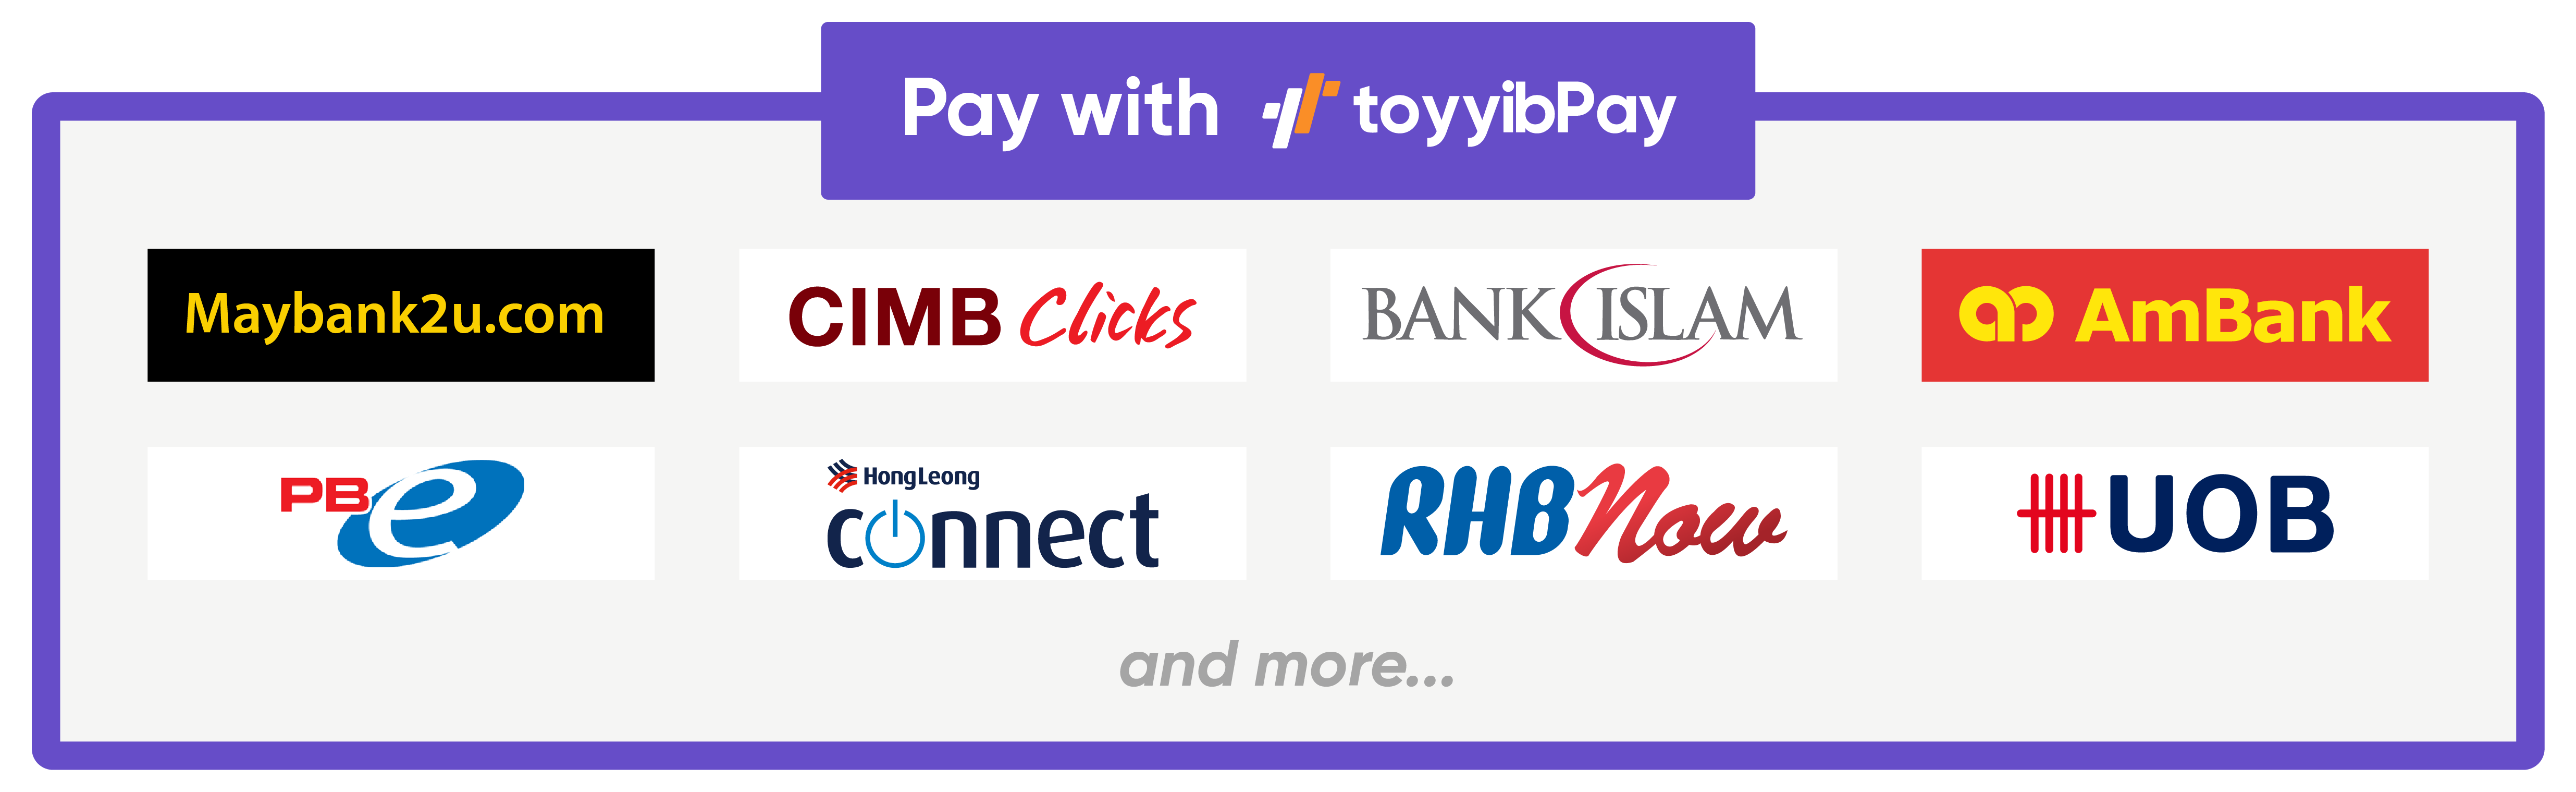 Online Banking / Credit Card